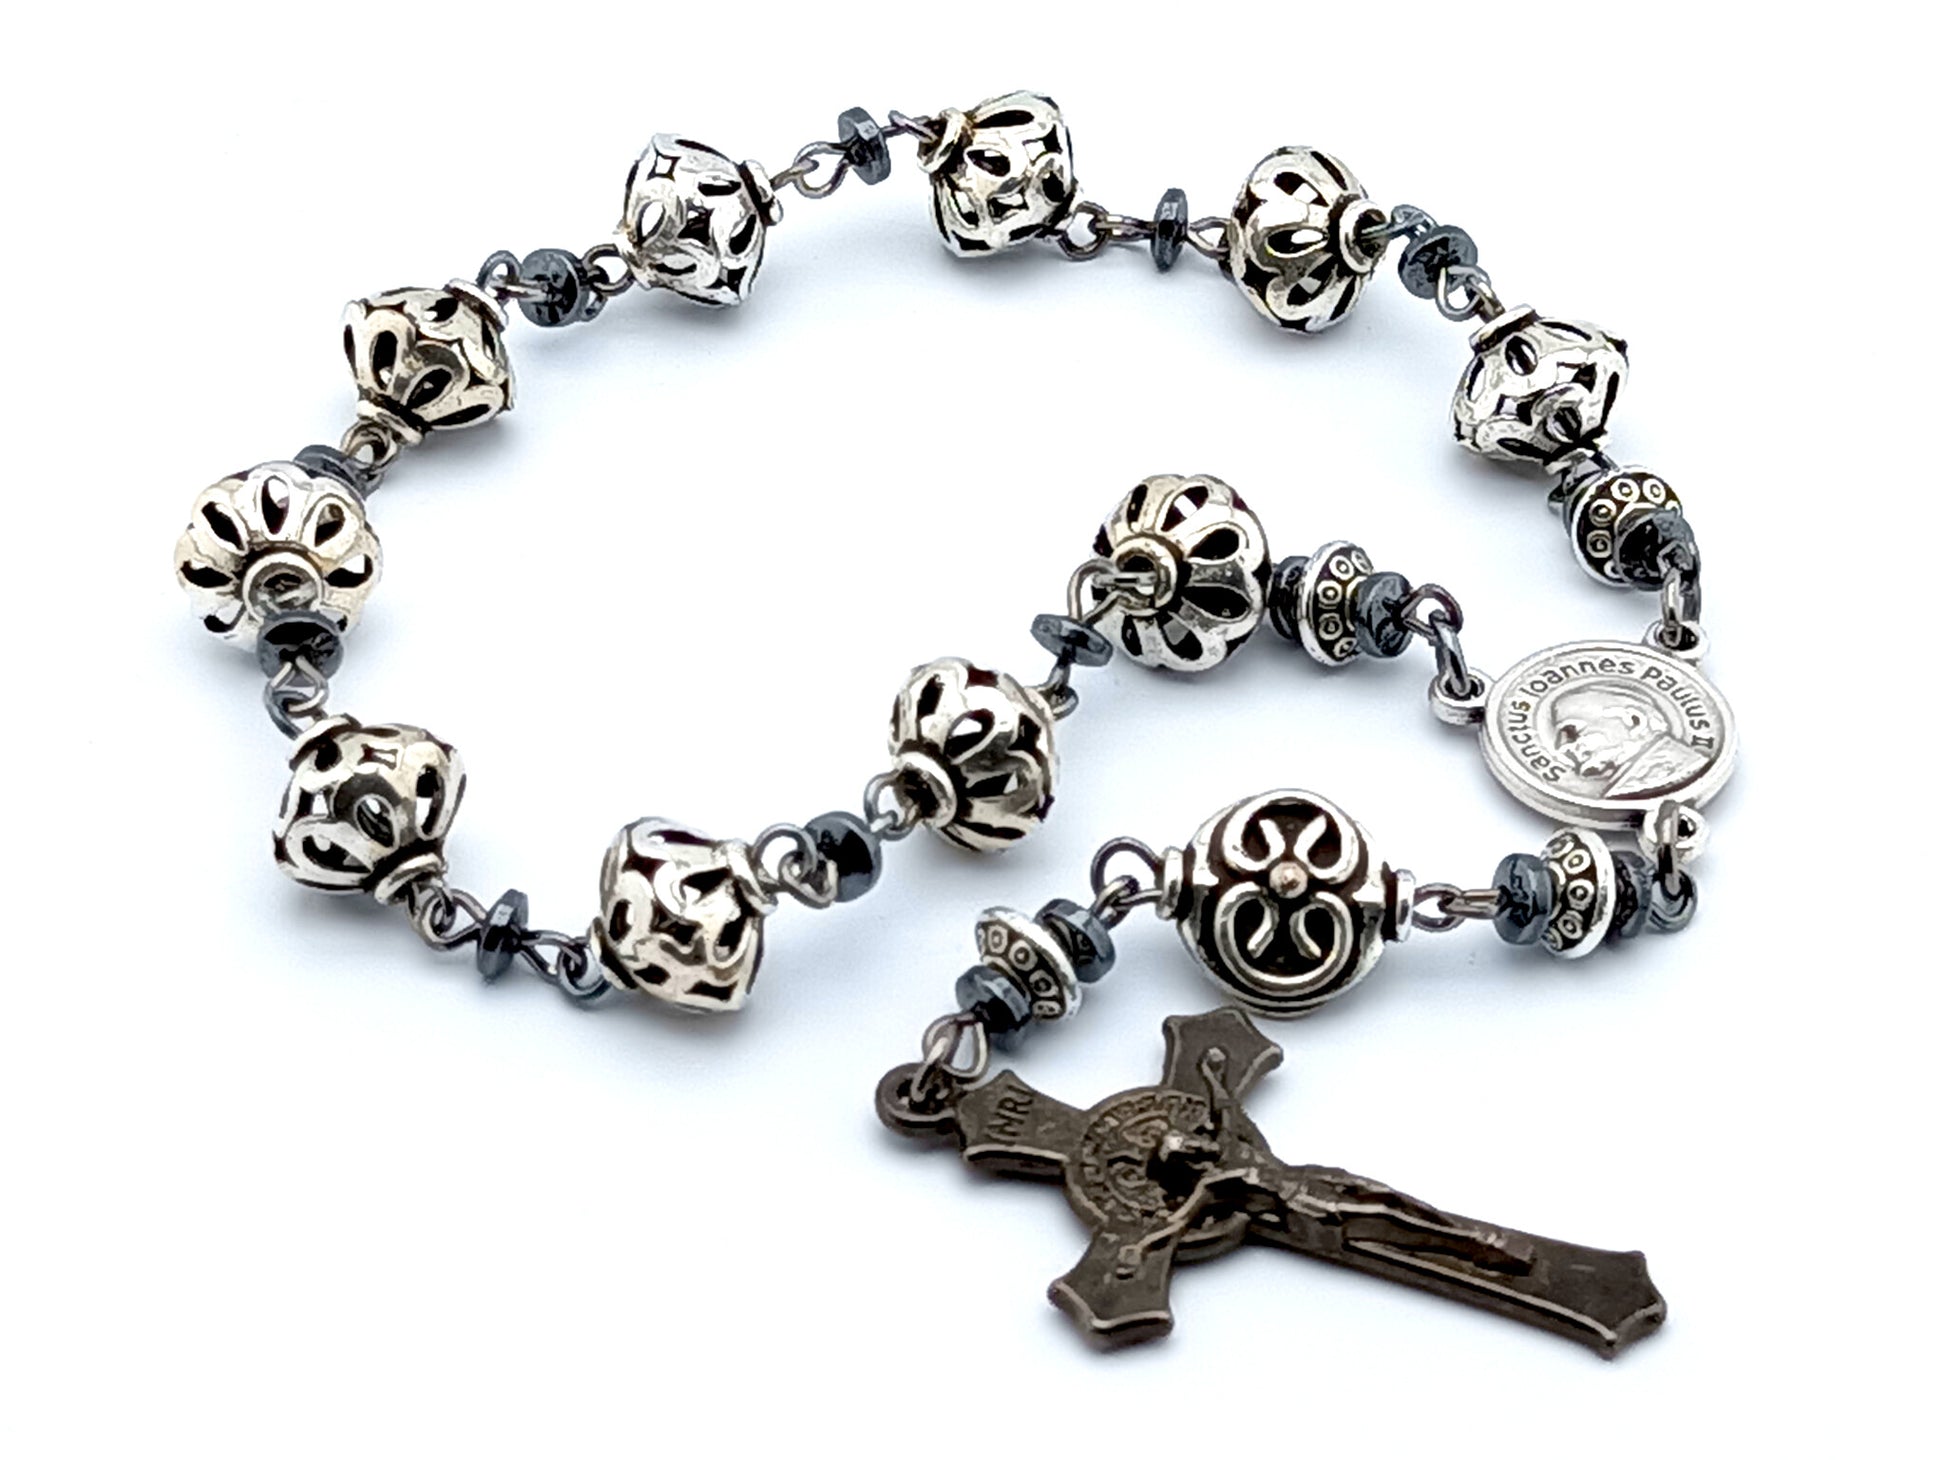 Saint John Paul II unique rosary beads single decade rosary with silver lattice beads, JPII centre medal and black Saint Benedict crucifix.